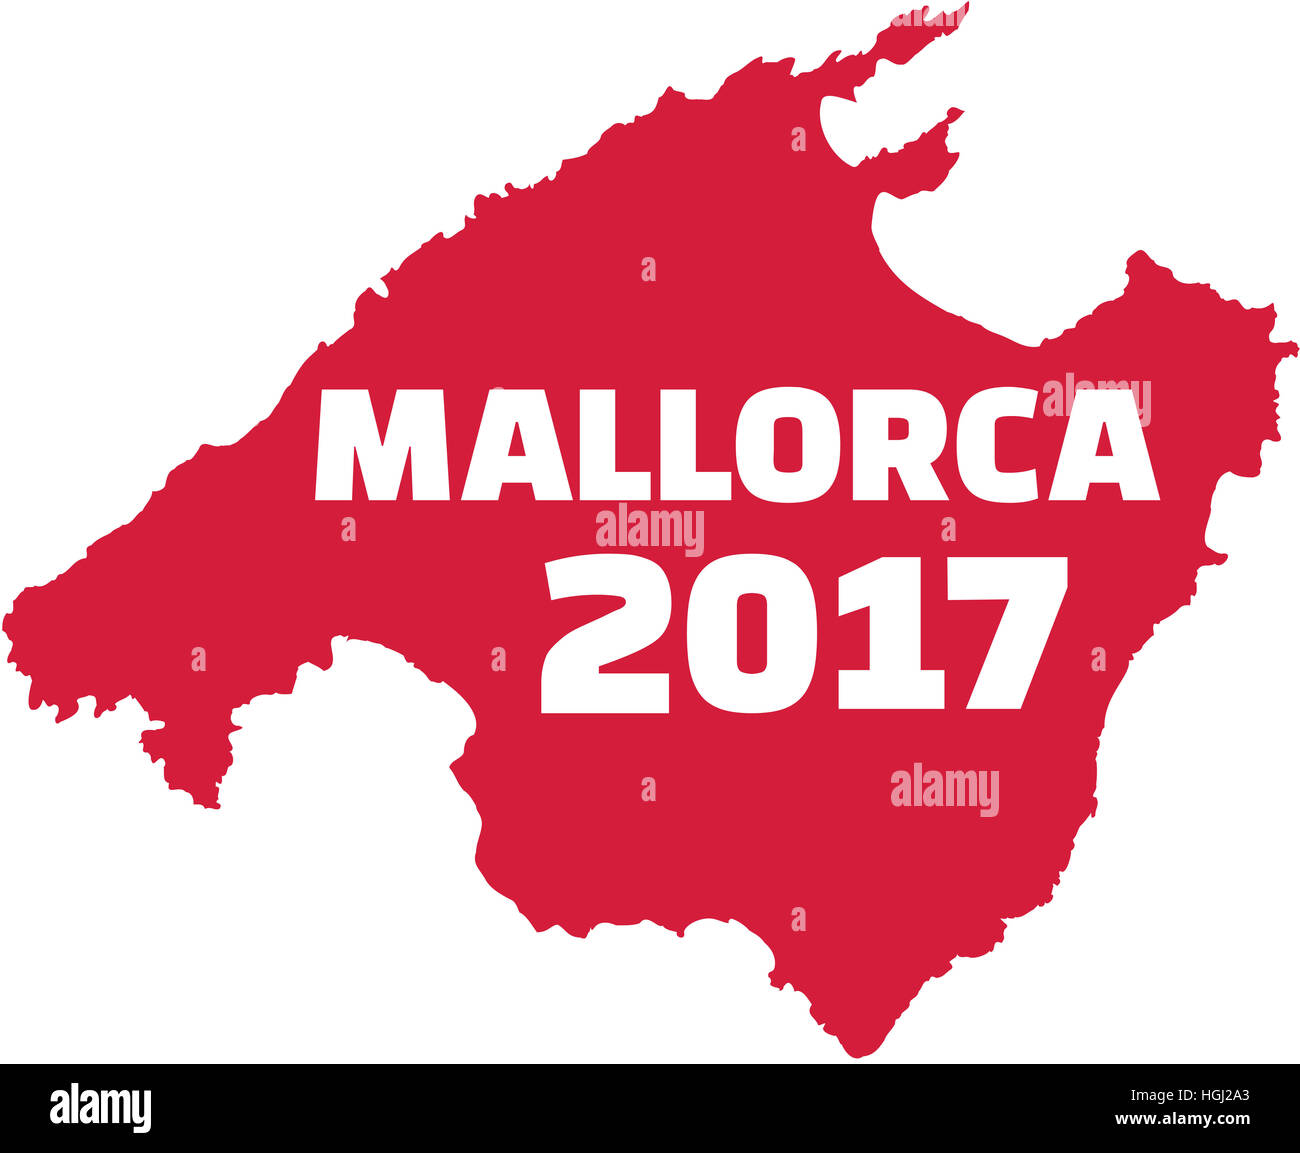 Mallorca map with mallorca 2017 Stock Photo